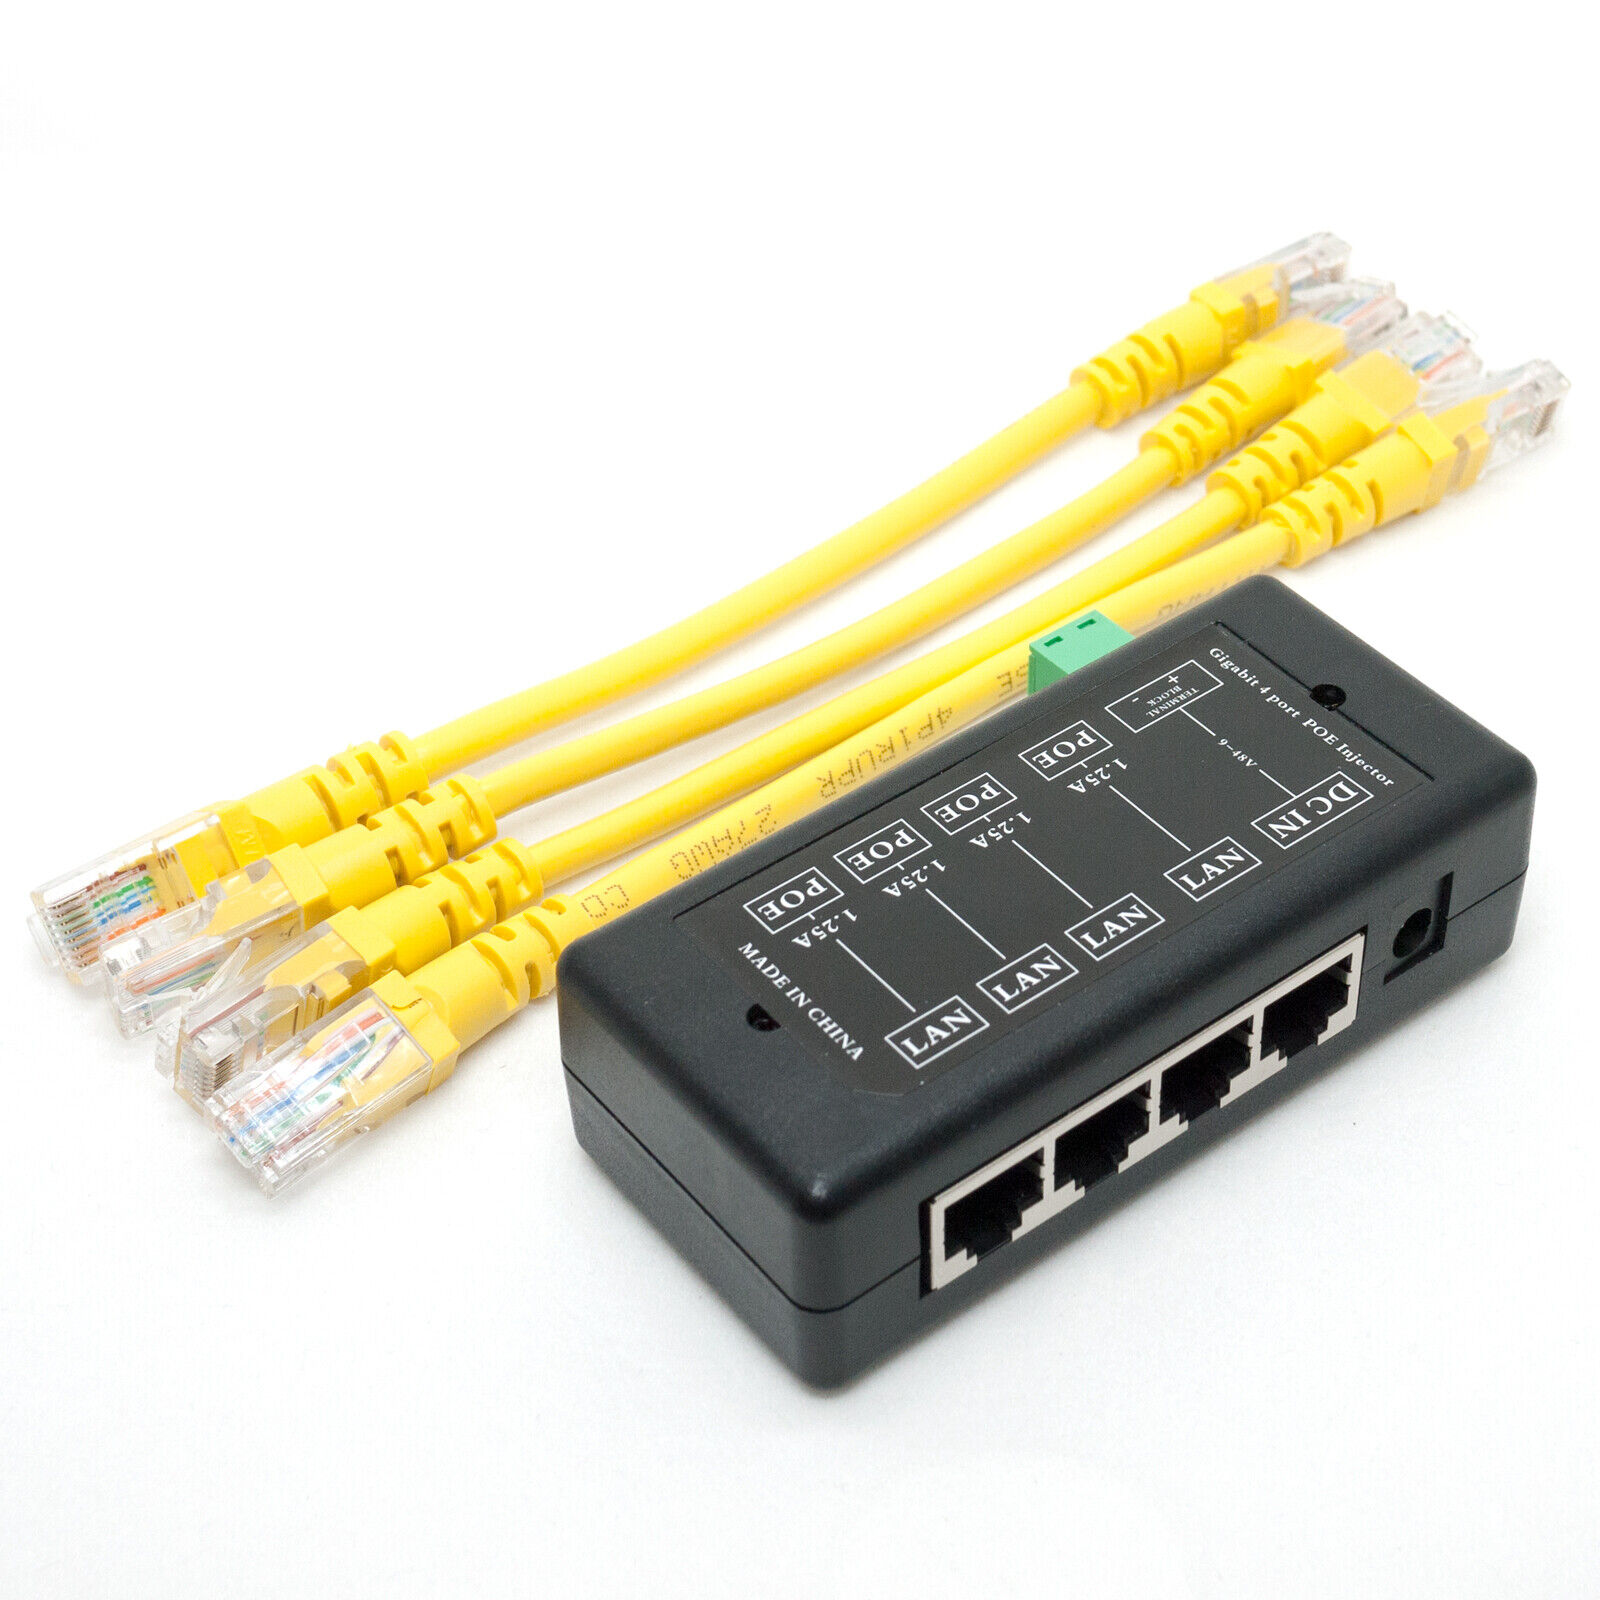 4 Ports Gigabit Passive PoE injector midspan Ethernet Adapter NO Power Adapter